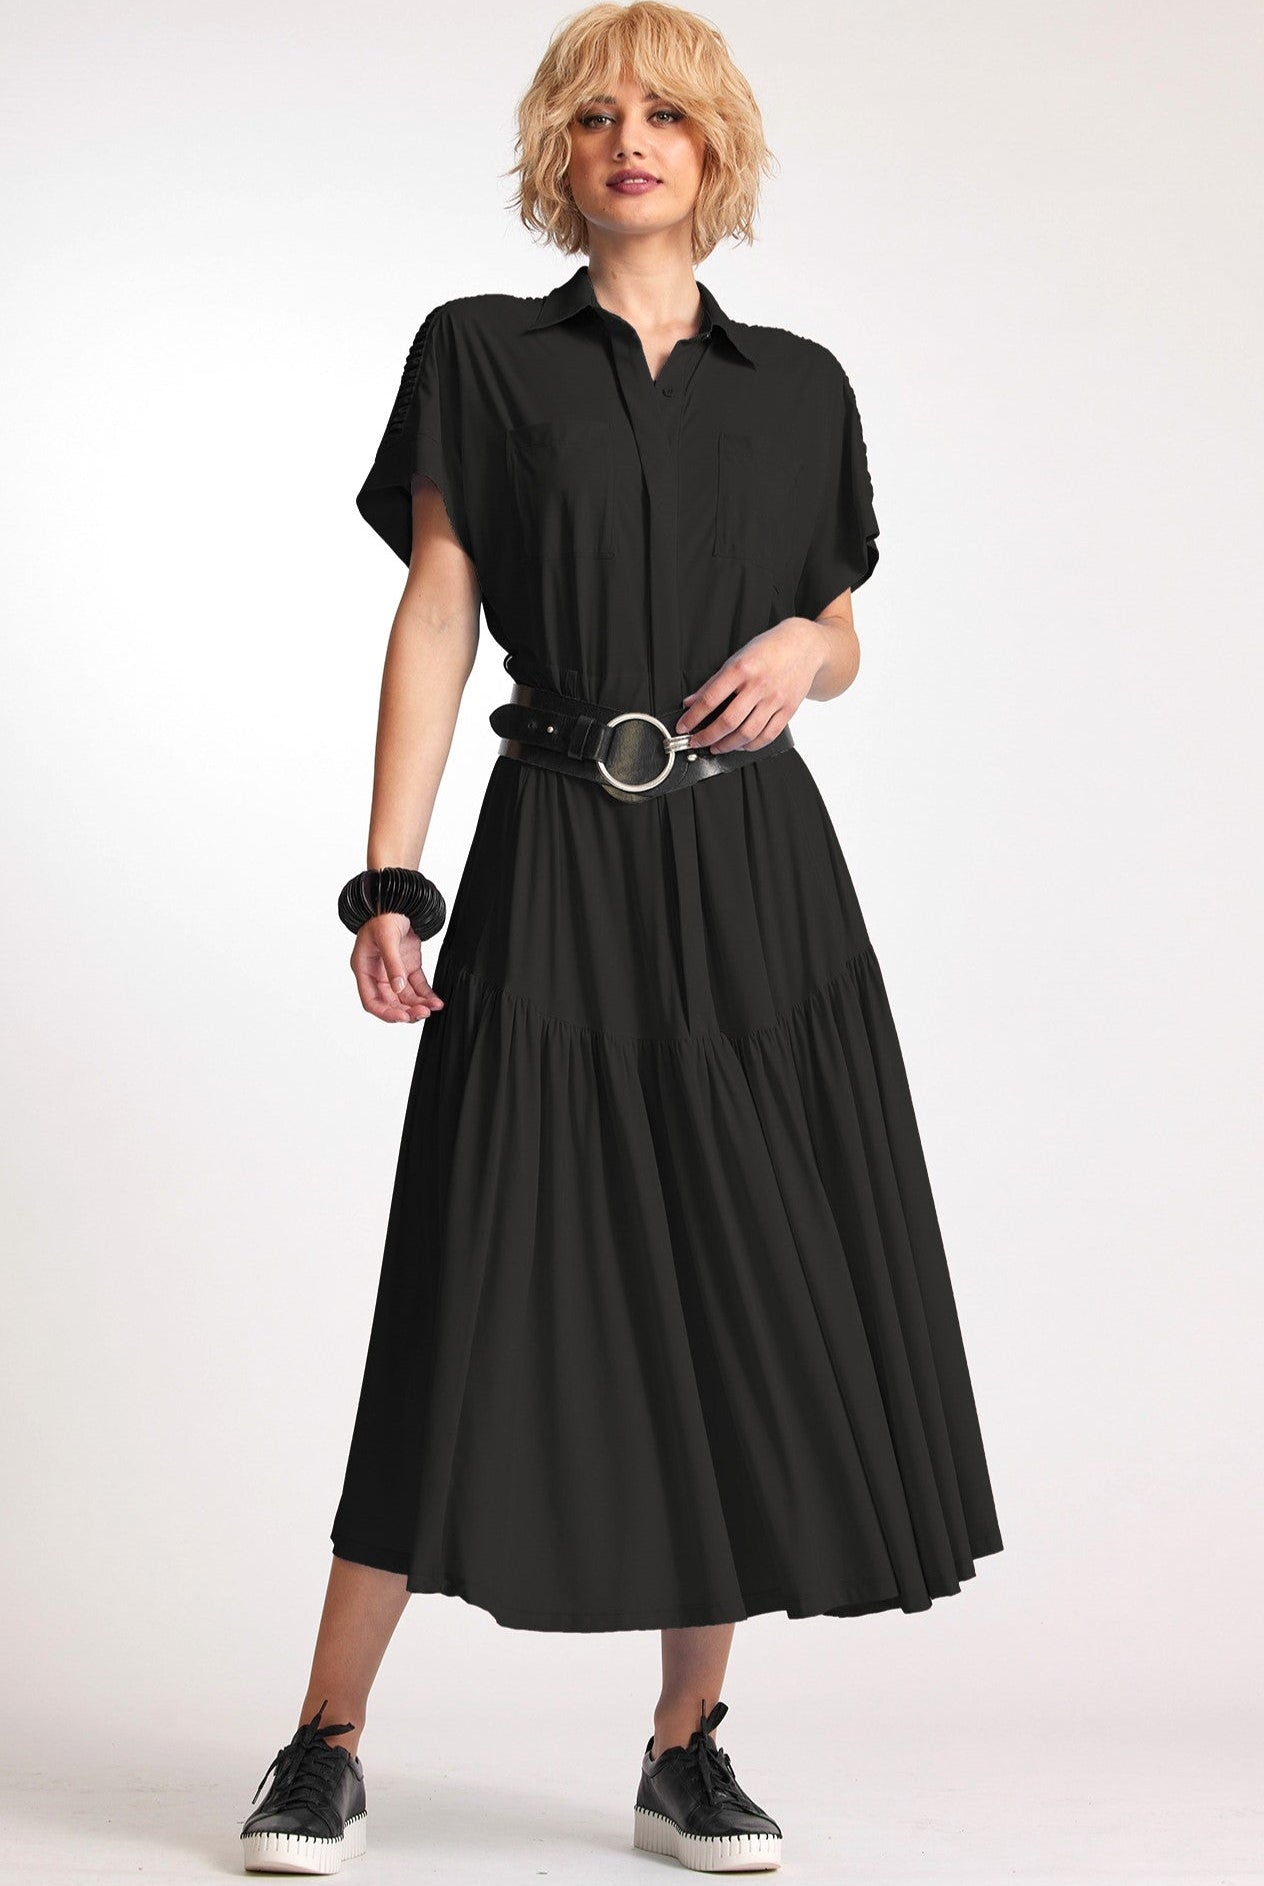 PAULA RYAN Rouched Cap Sleeve Dress - Black - Paula Ryan